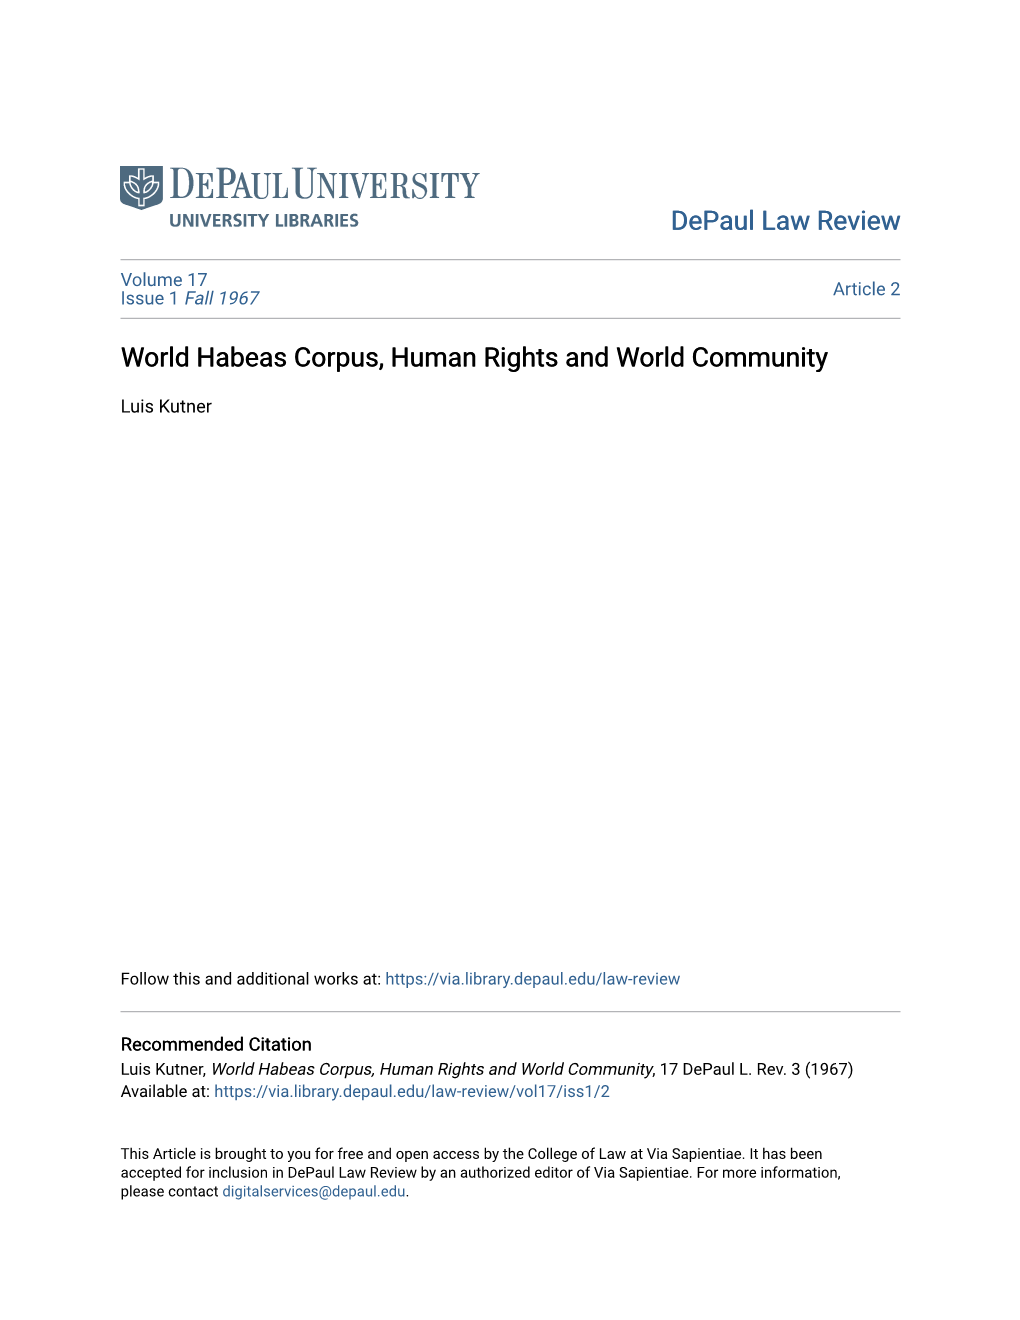 World Habeas Corpus, Human Rights and World Community